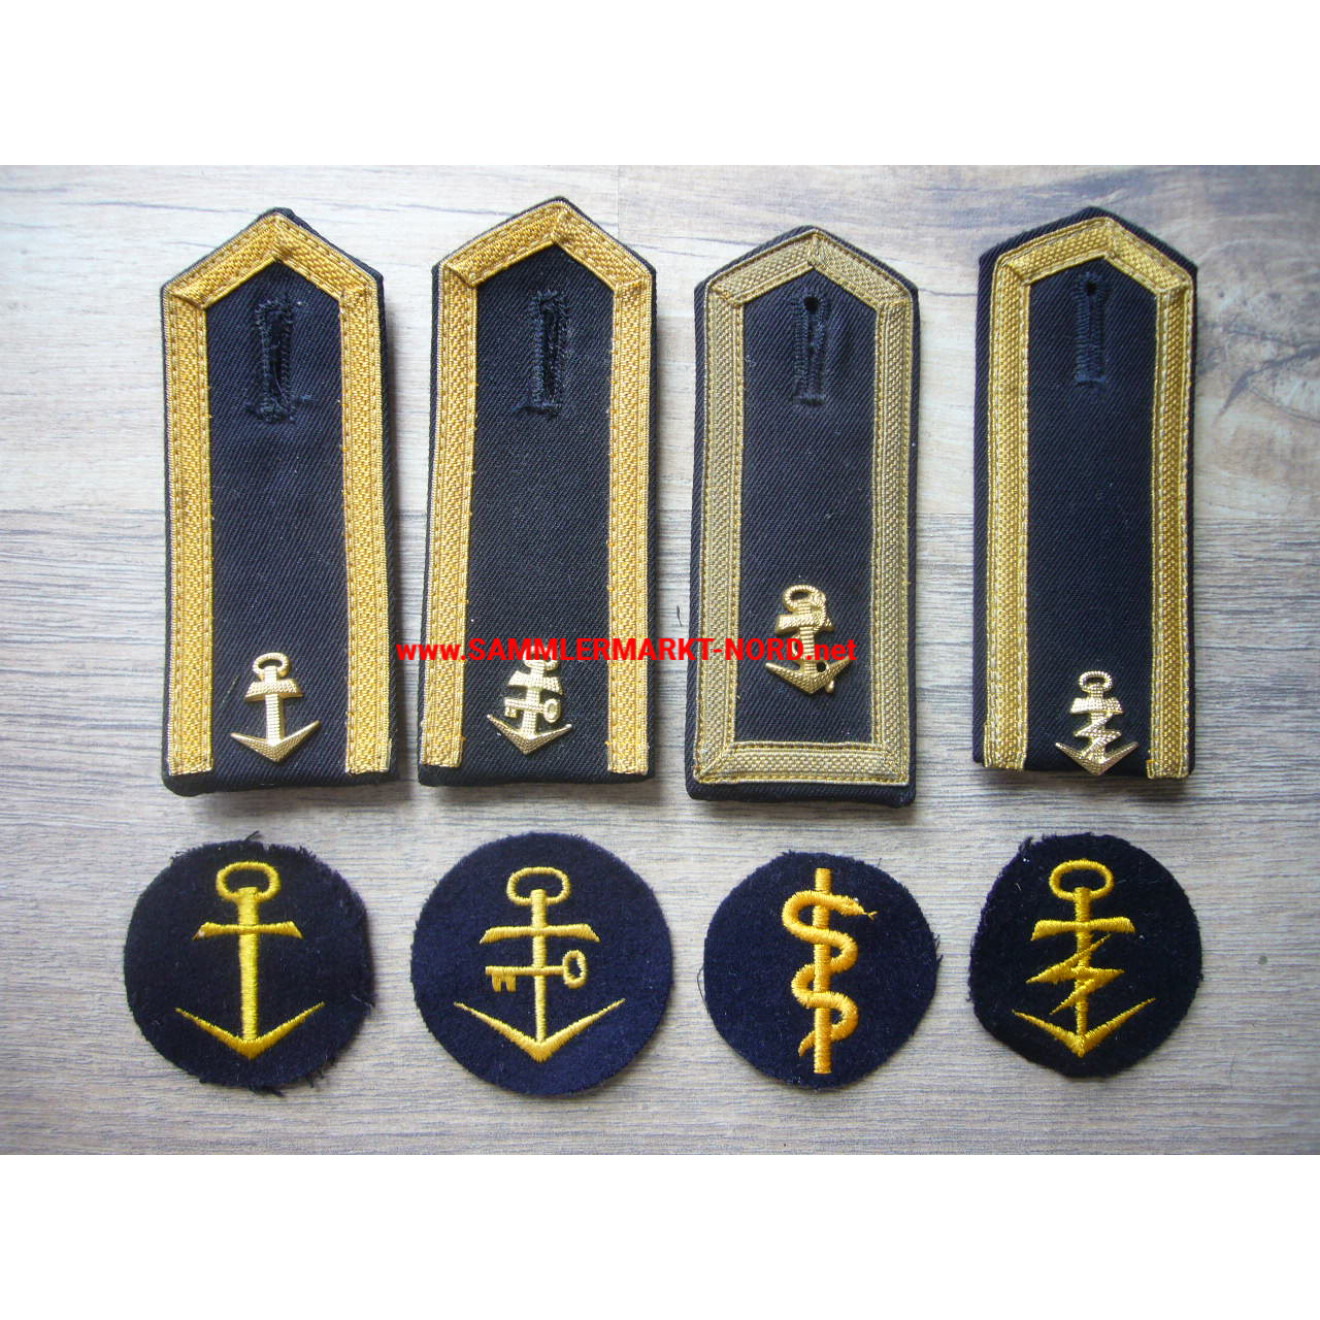 Federal Navy - Convolute of uniform parts